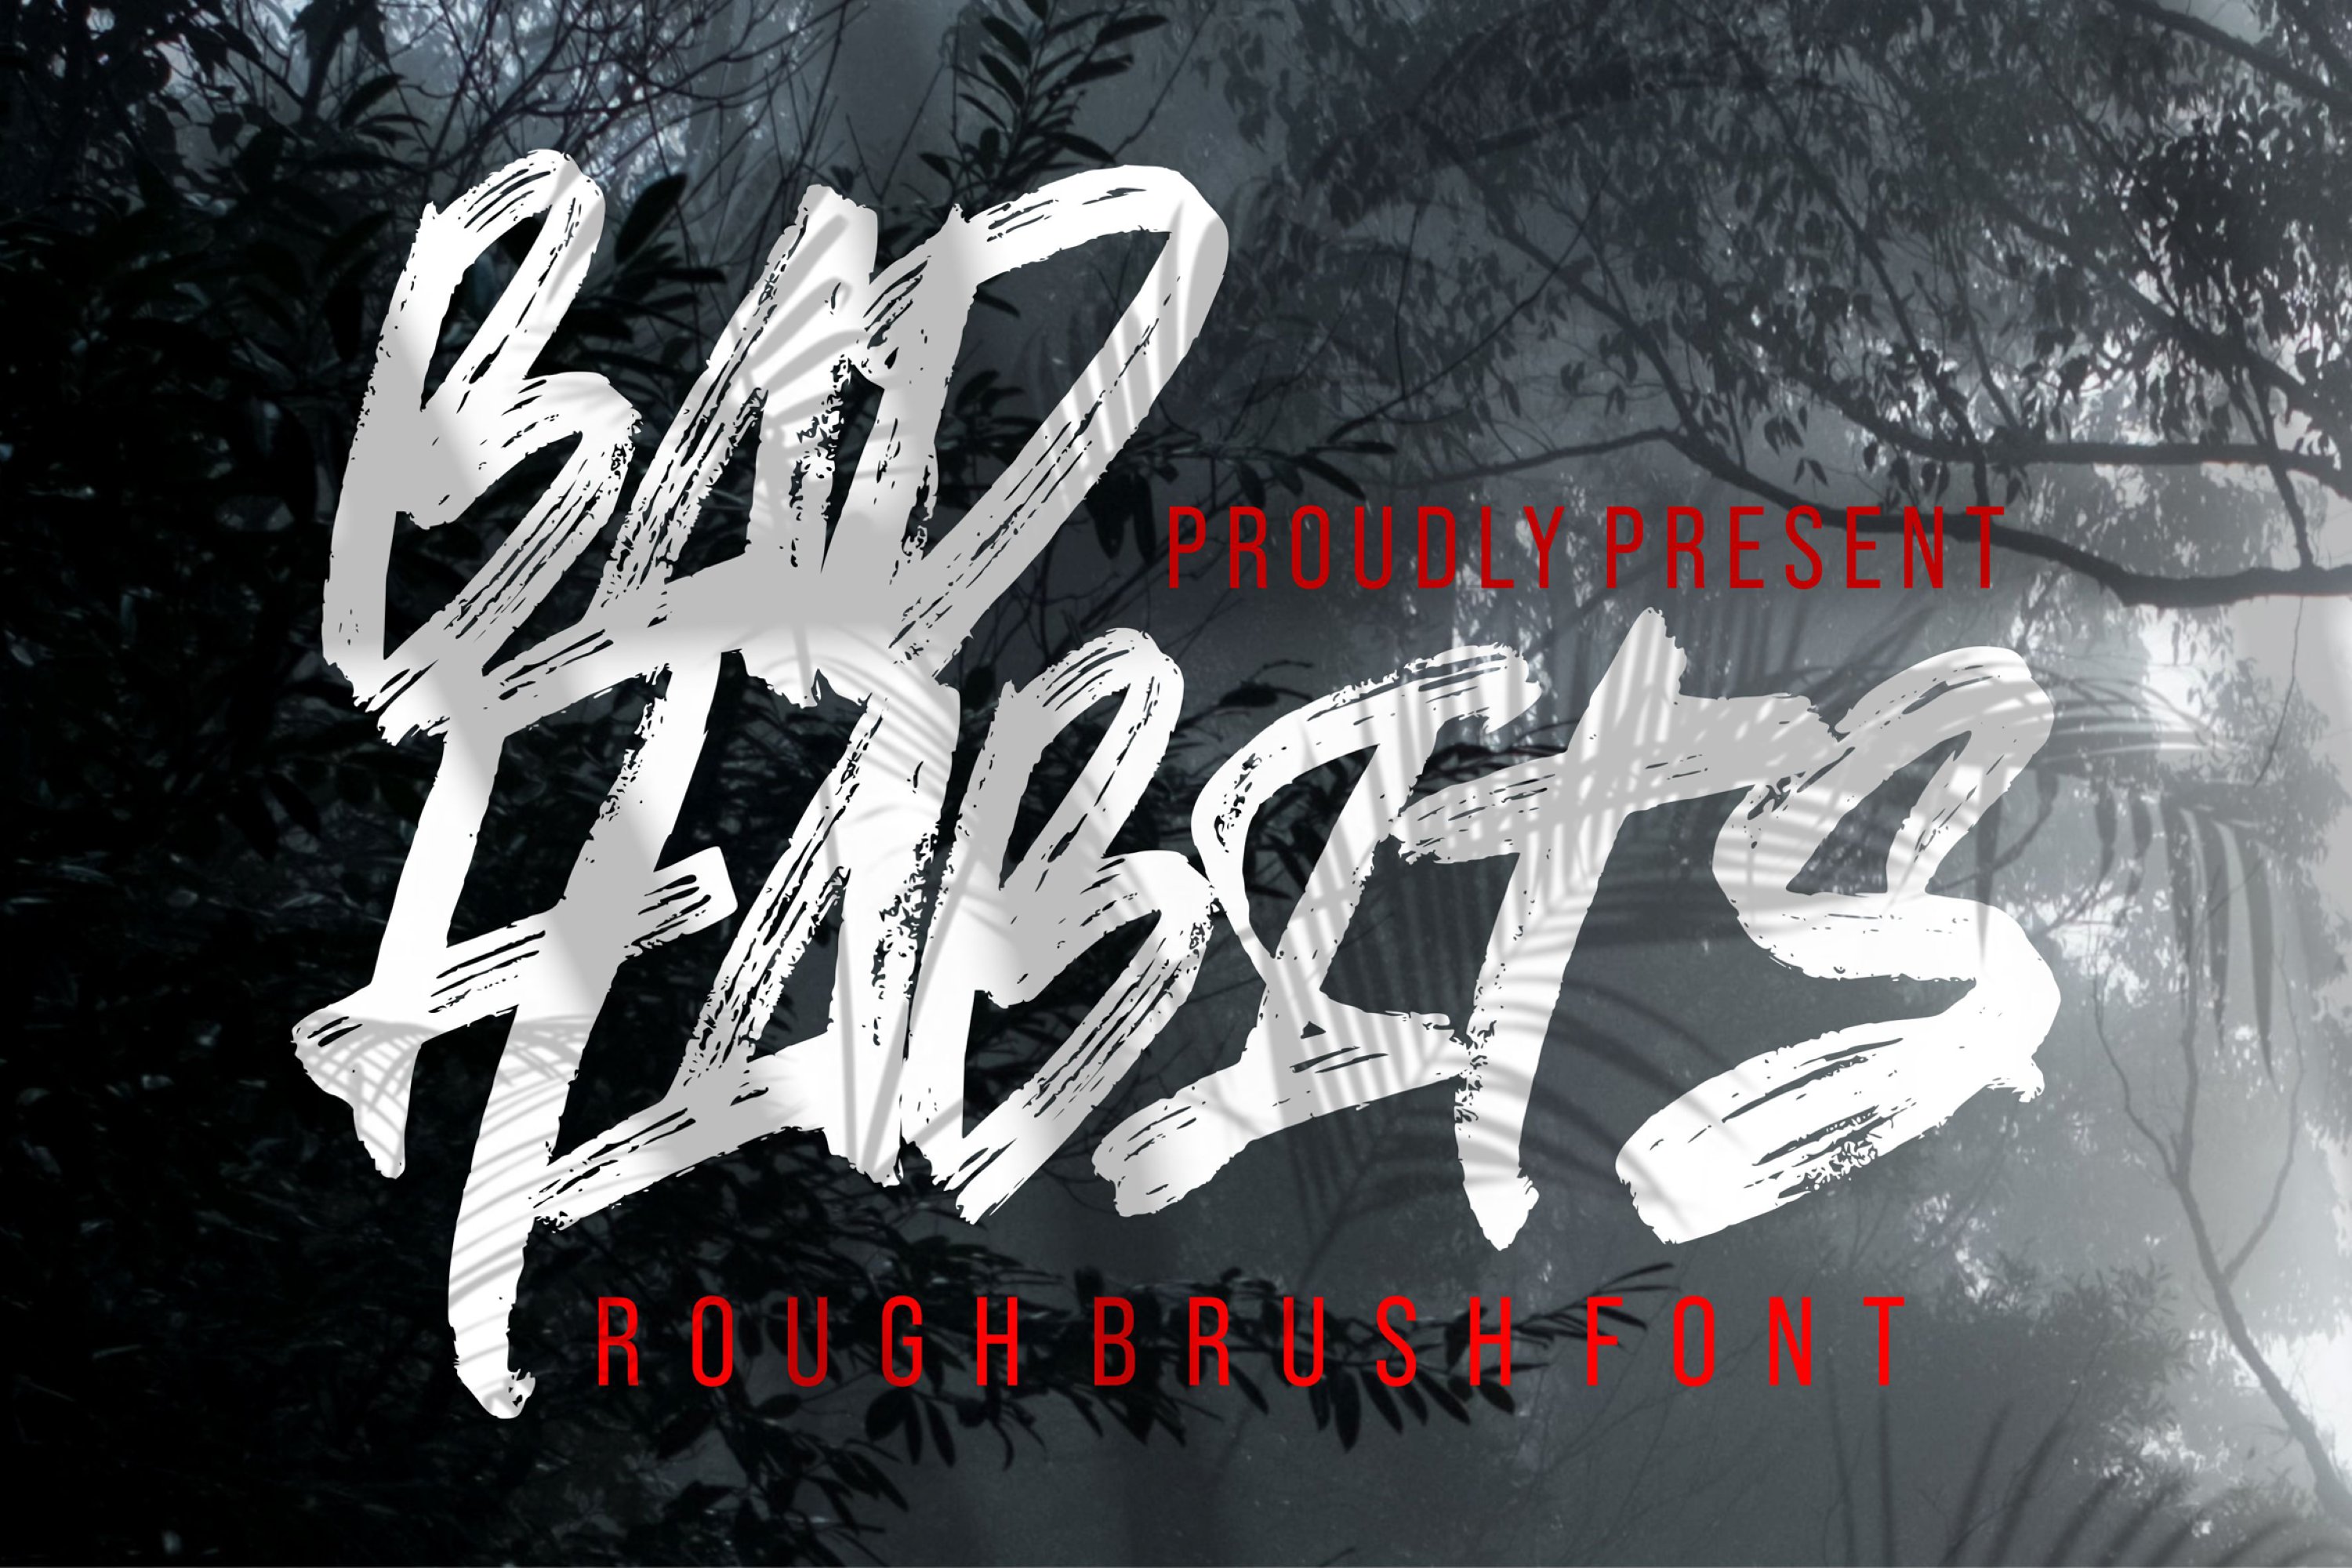 Bad Habits - Rough Brush font cover image.